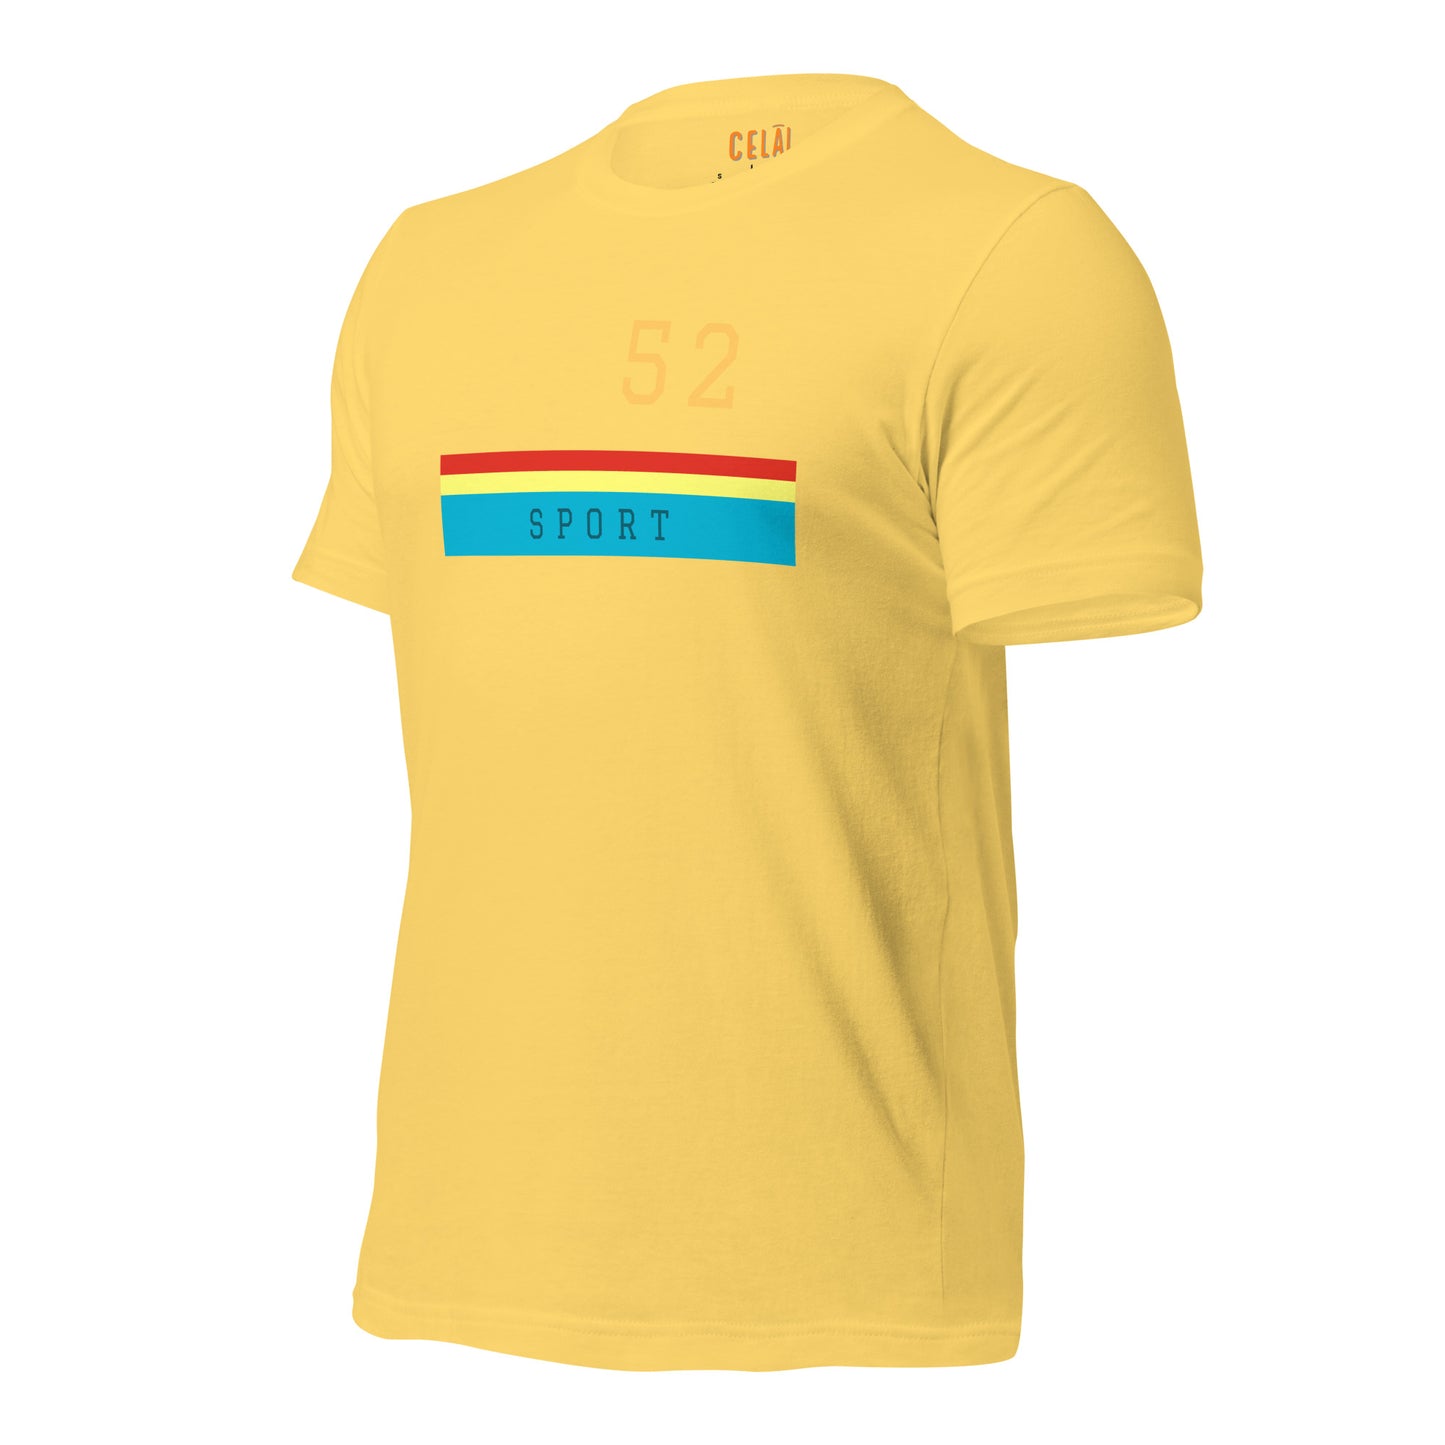 52 Unisex t-shirt